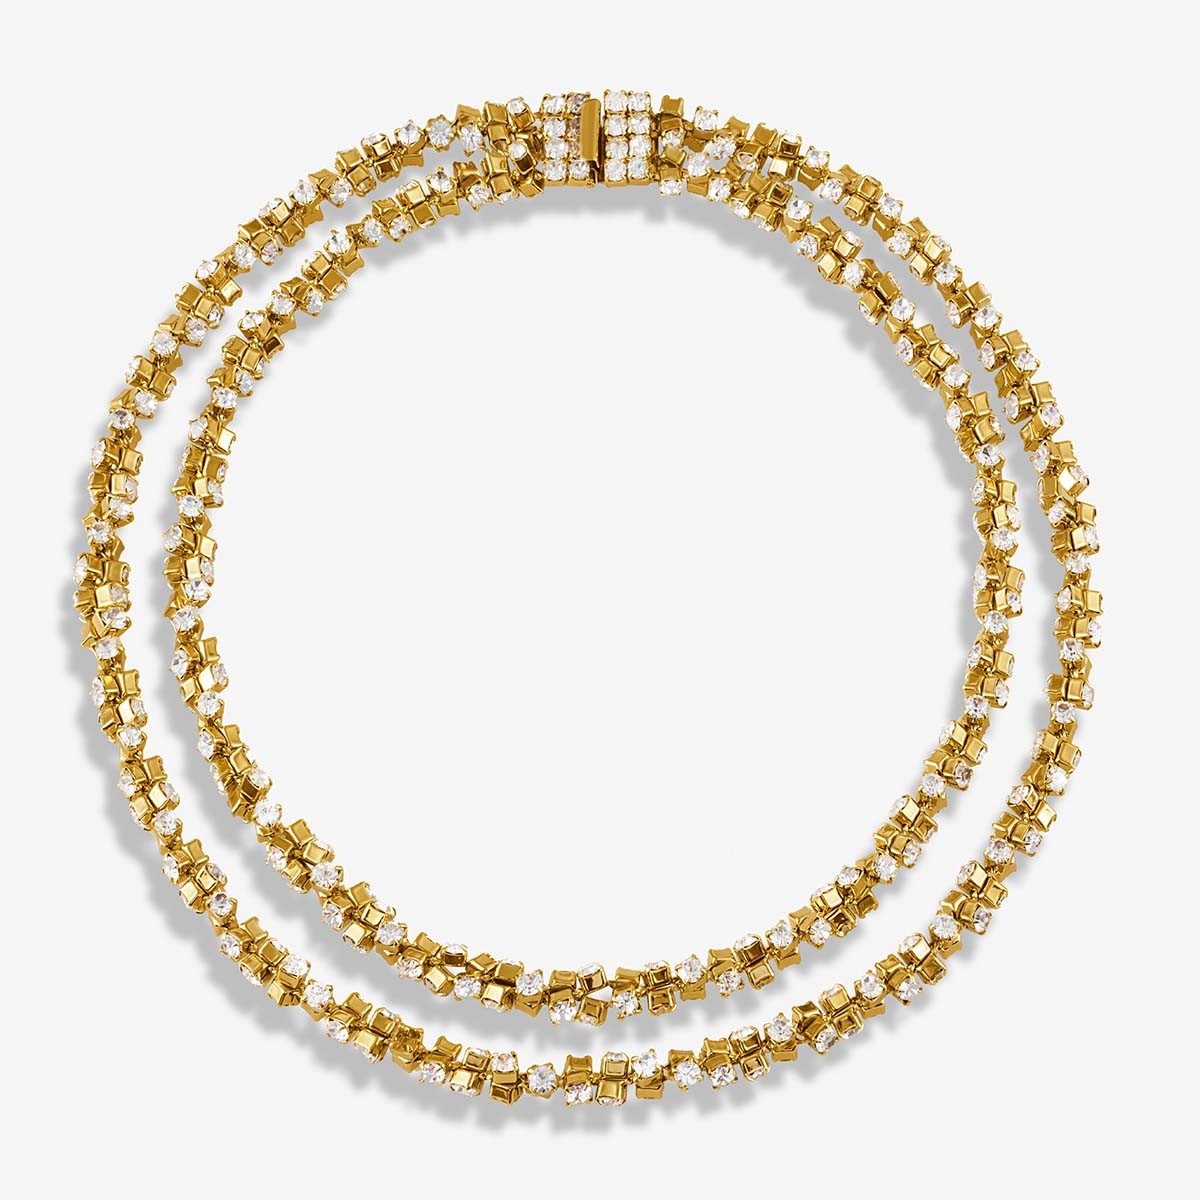 Trevise - Halskette - 24k vergoldet